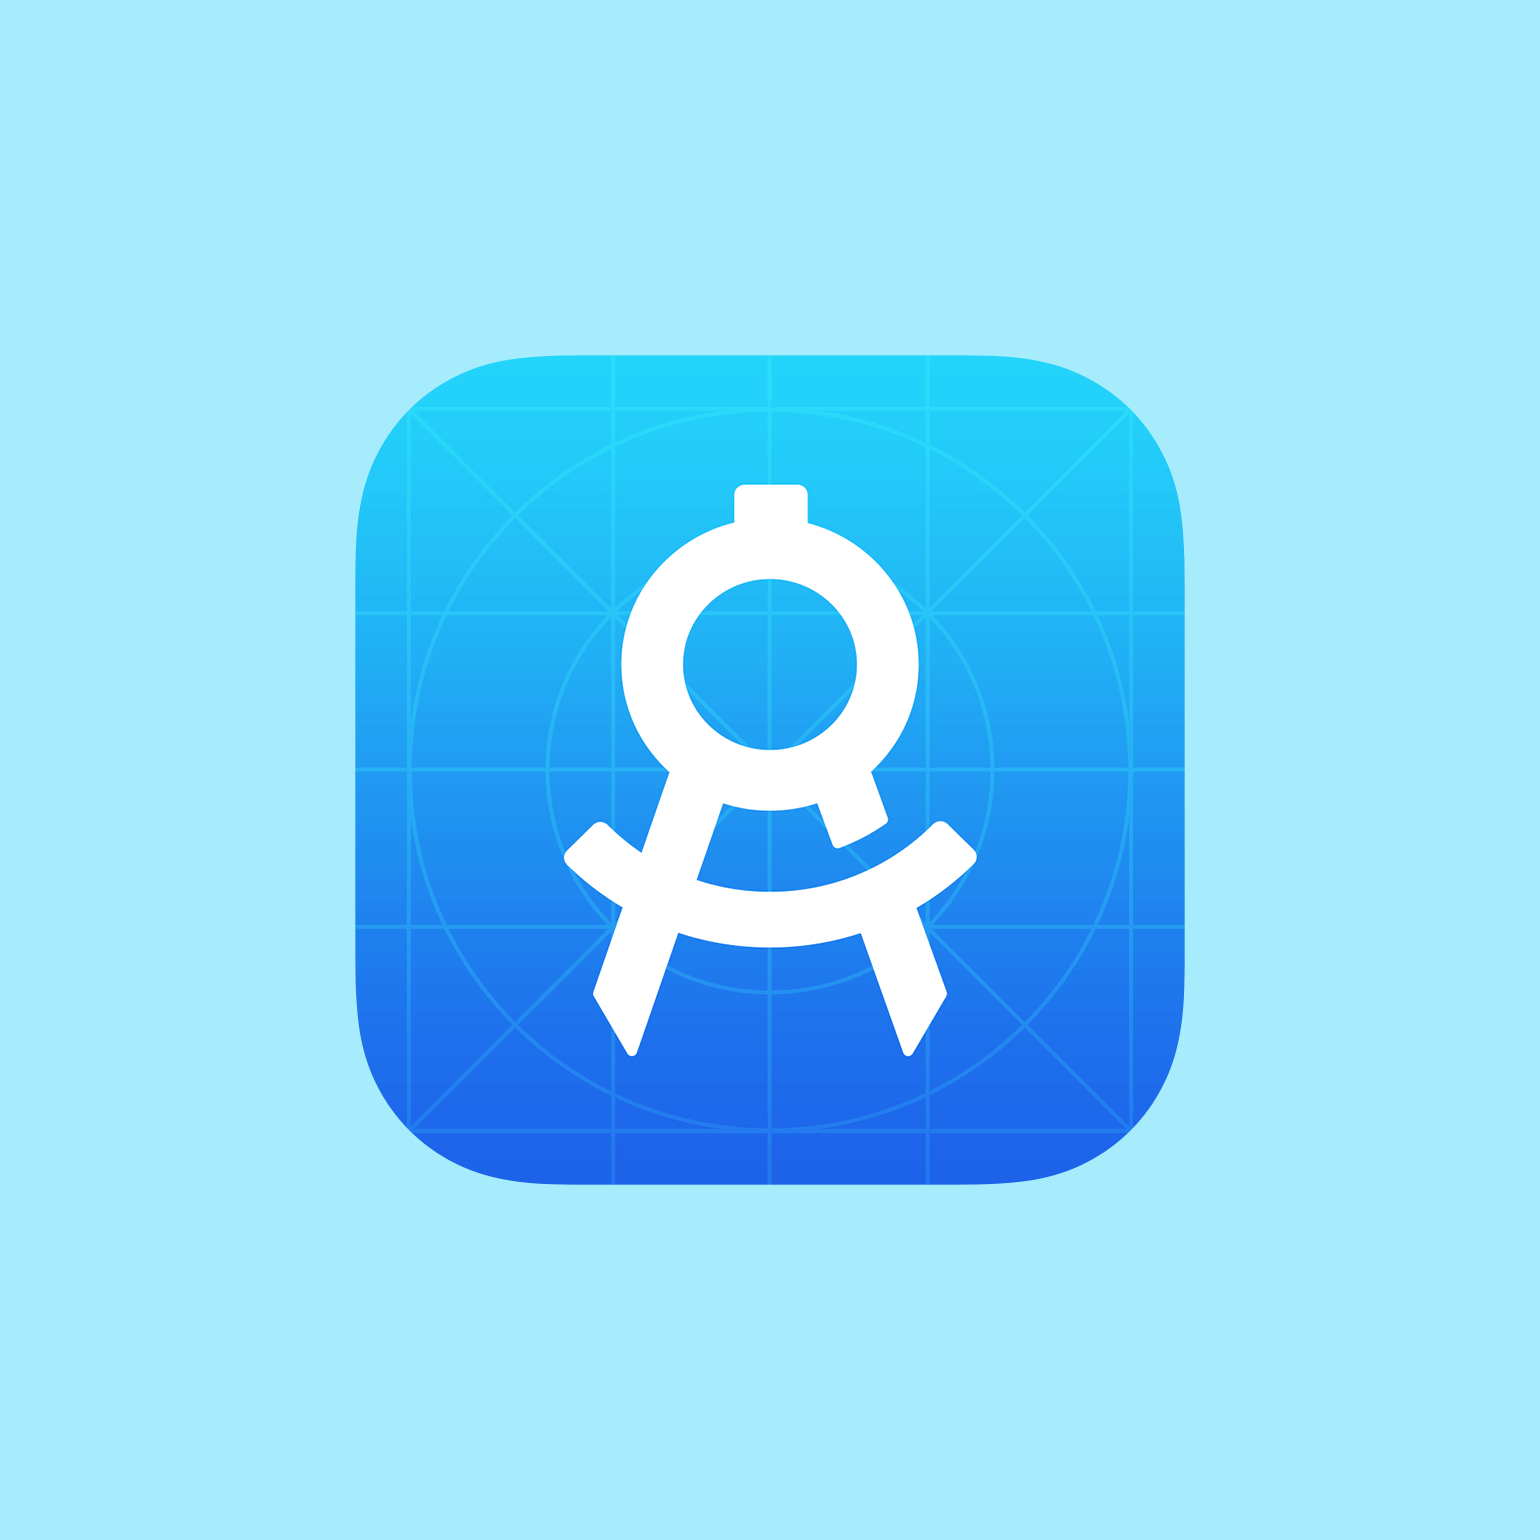 Download Mockup Free App Icon - Free Apple iPhone 8 App Screen ...